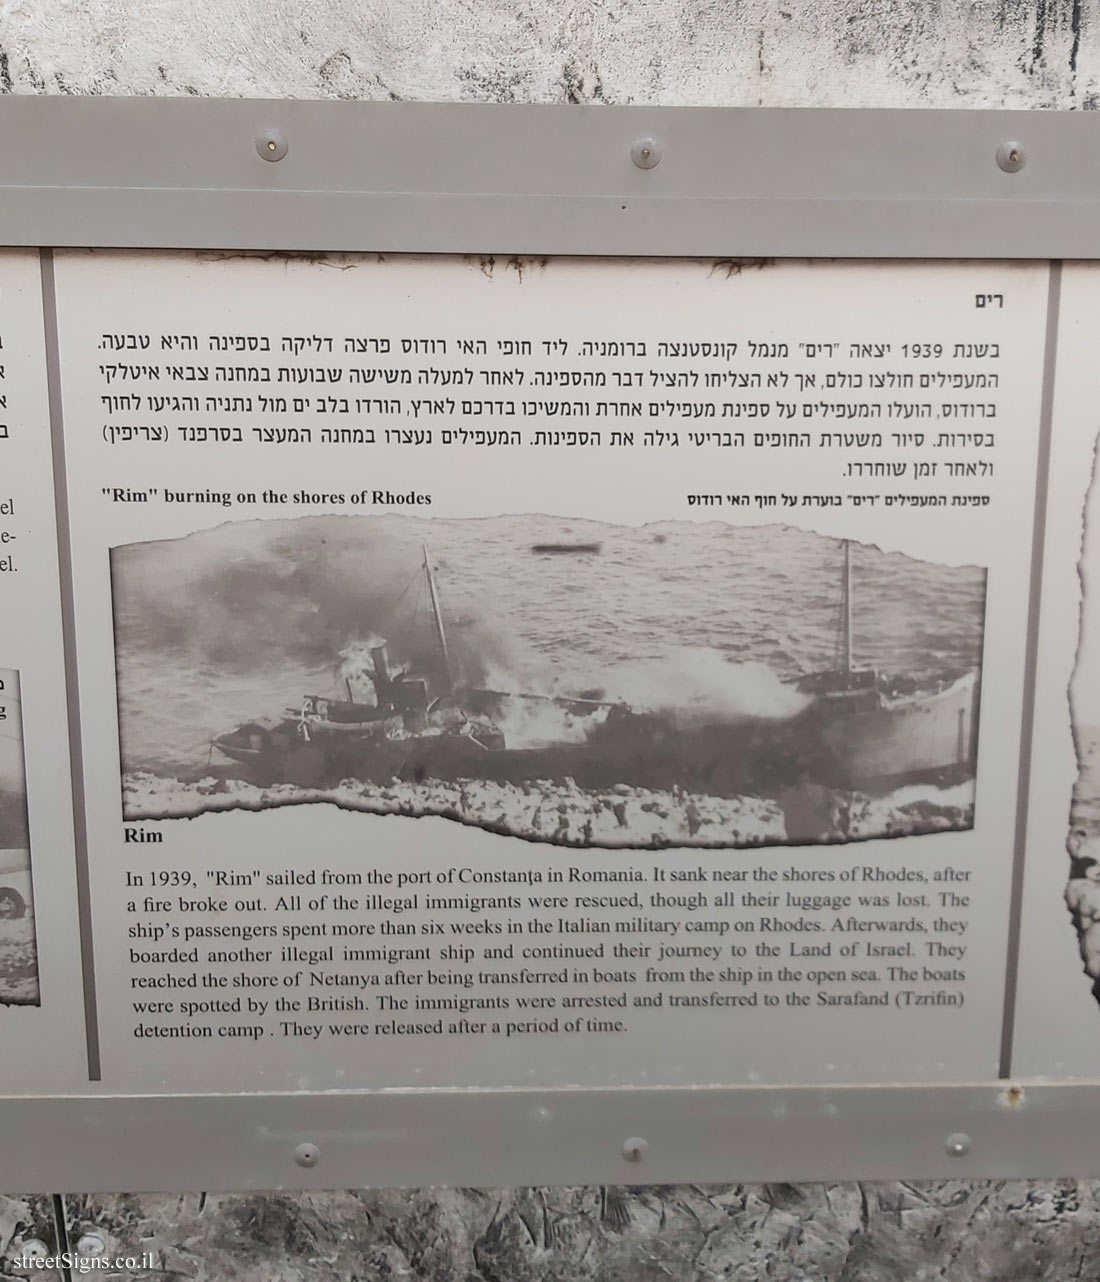 Tel Aviv - London Garden - The story of the illegal immigration - The ship "Rim"